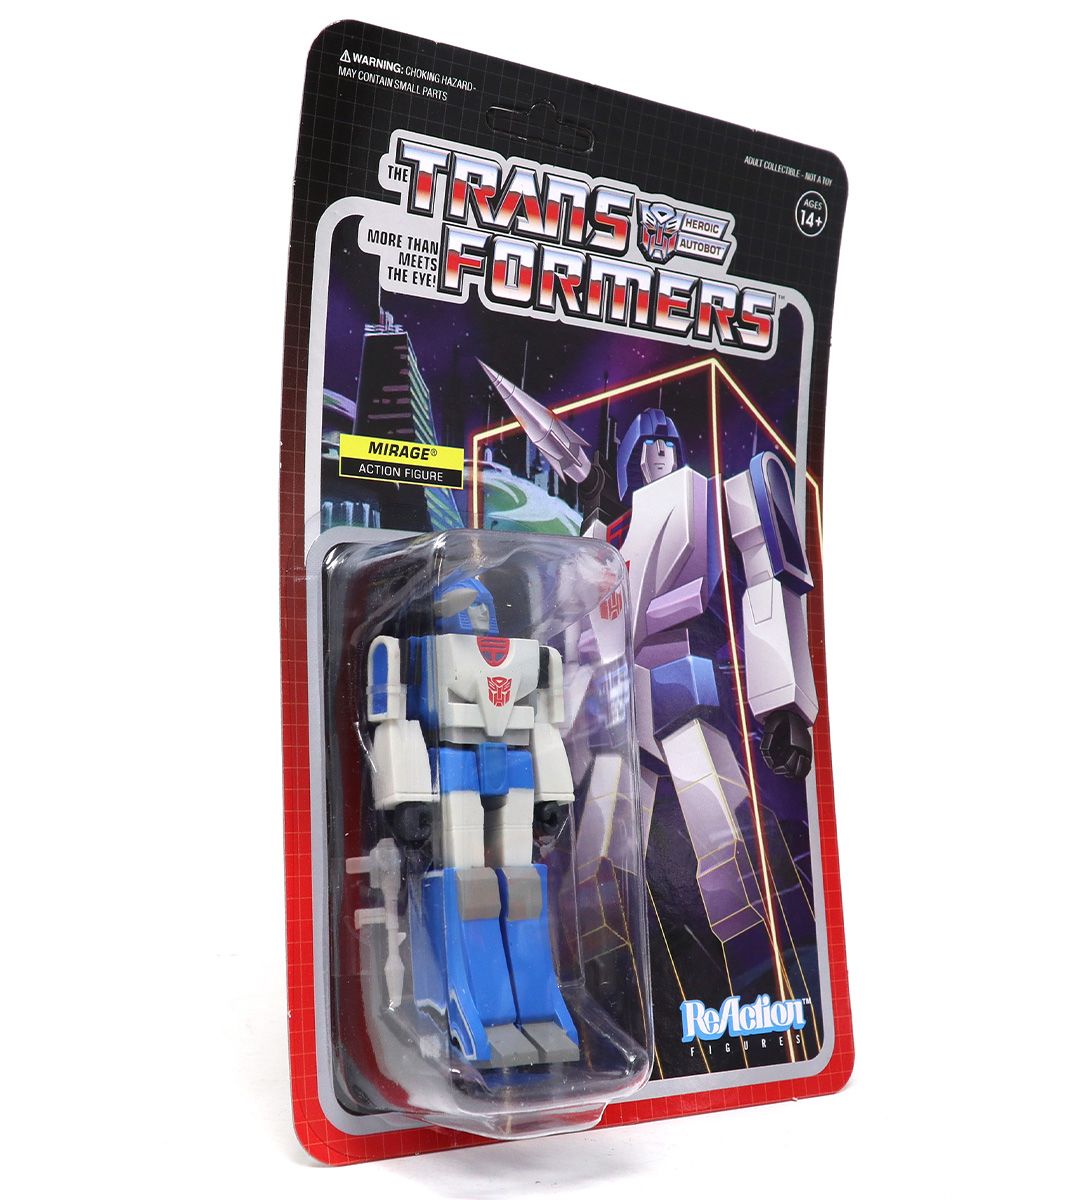 Mirage - Transformers wave 2 - ReAction figures